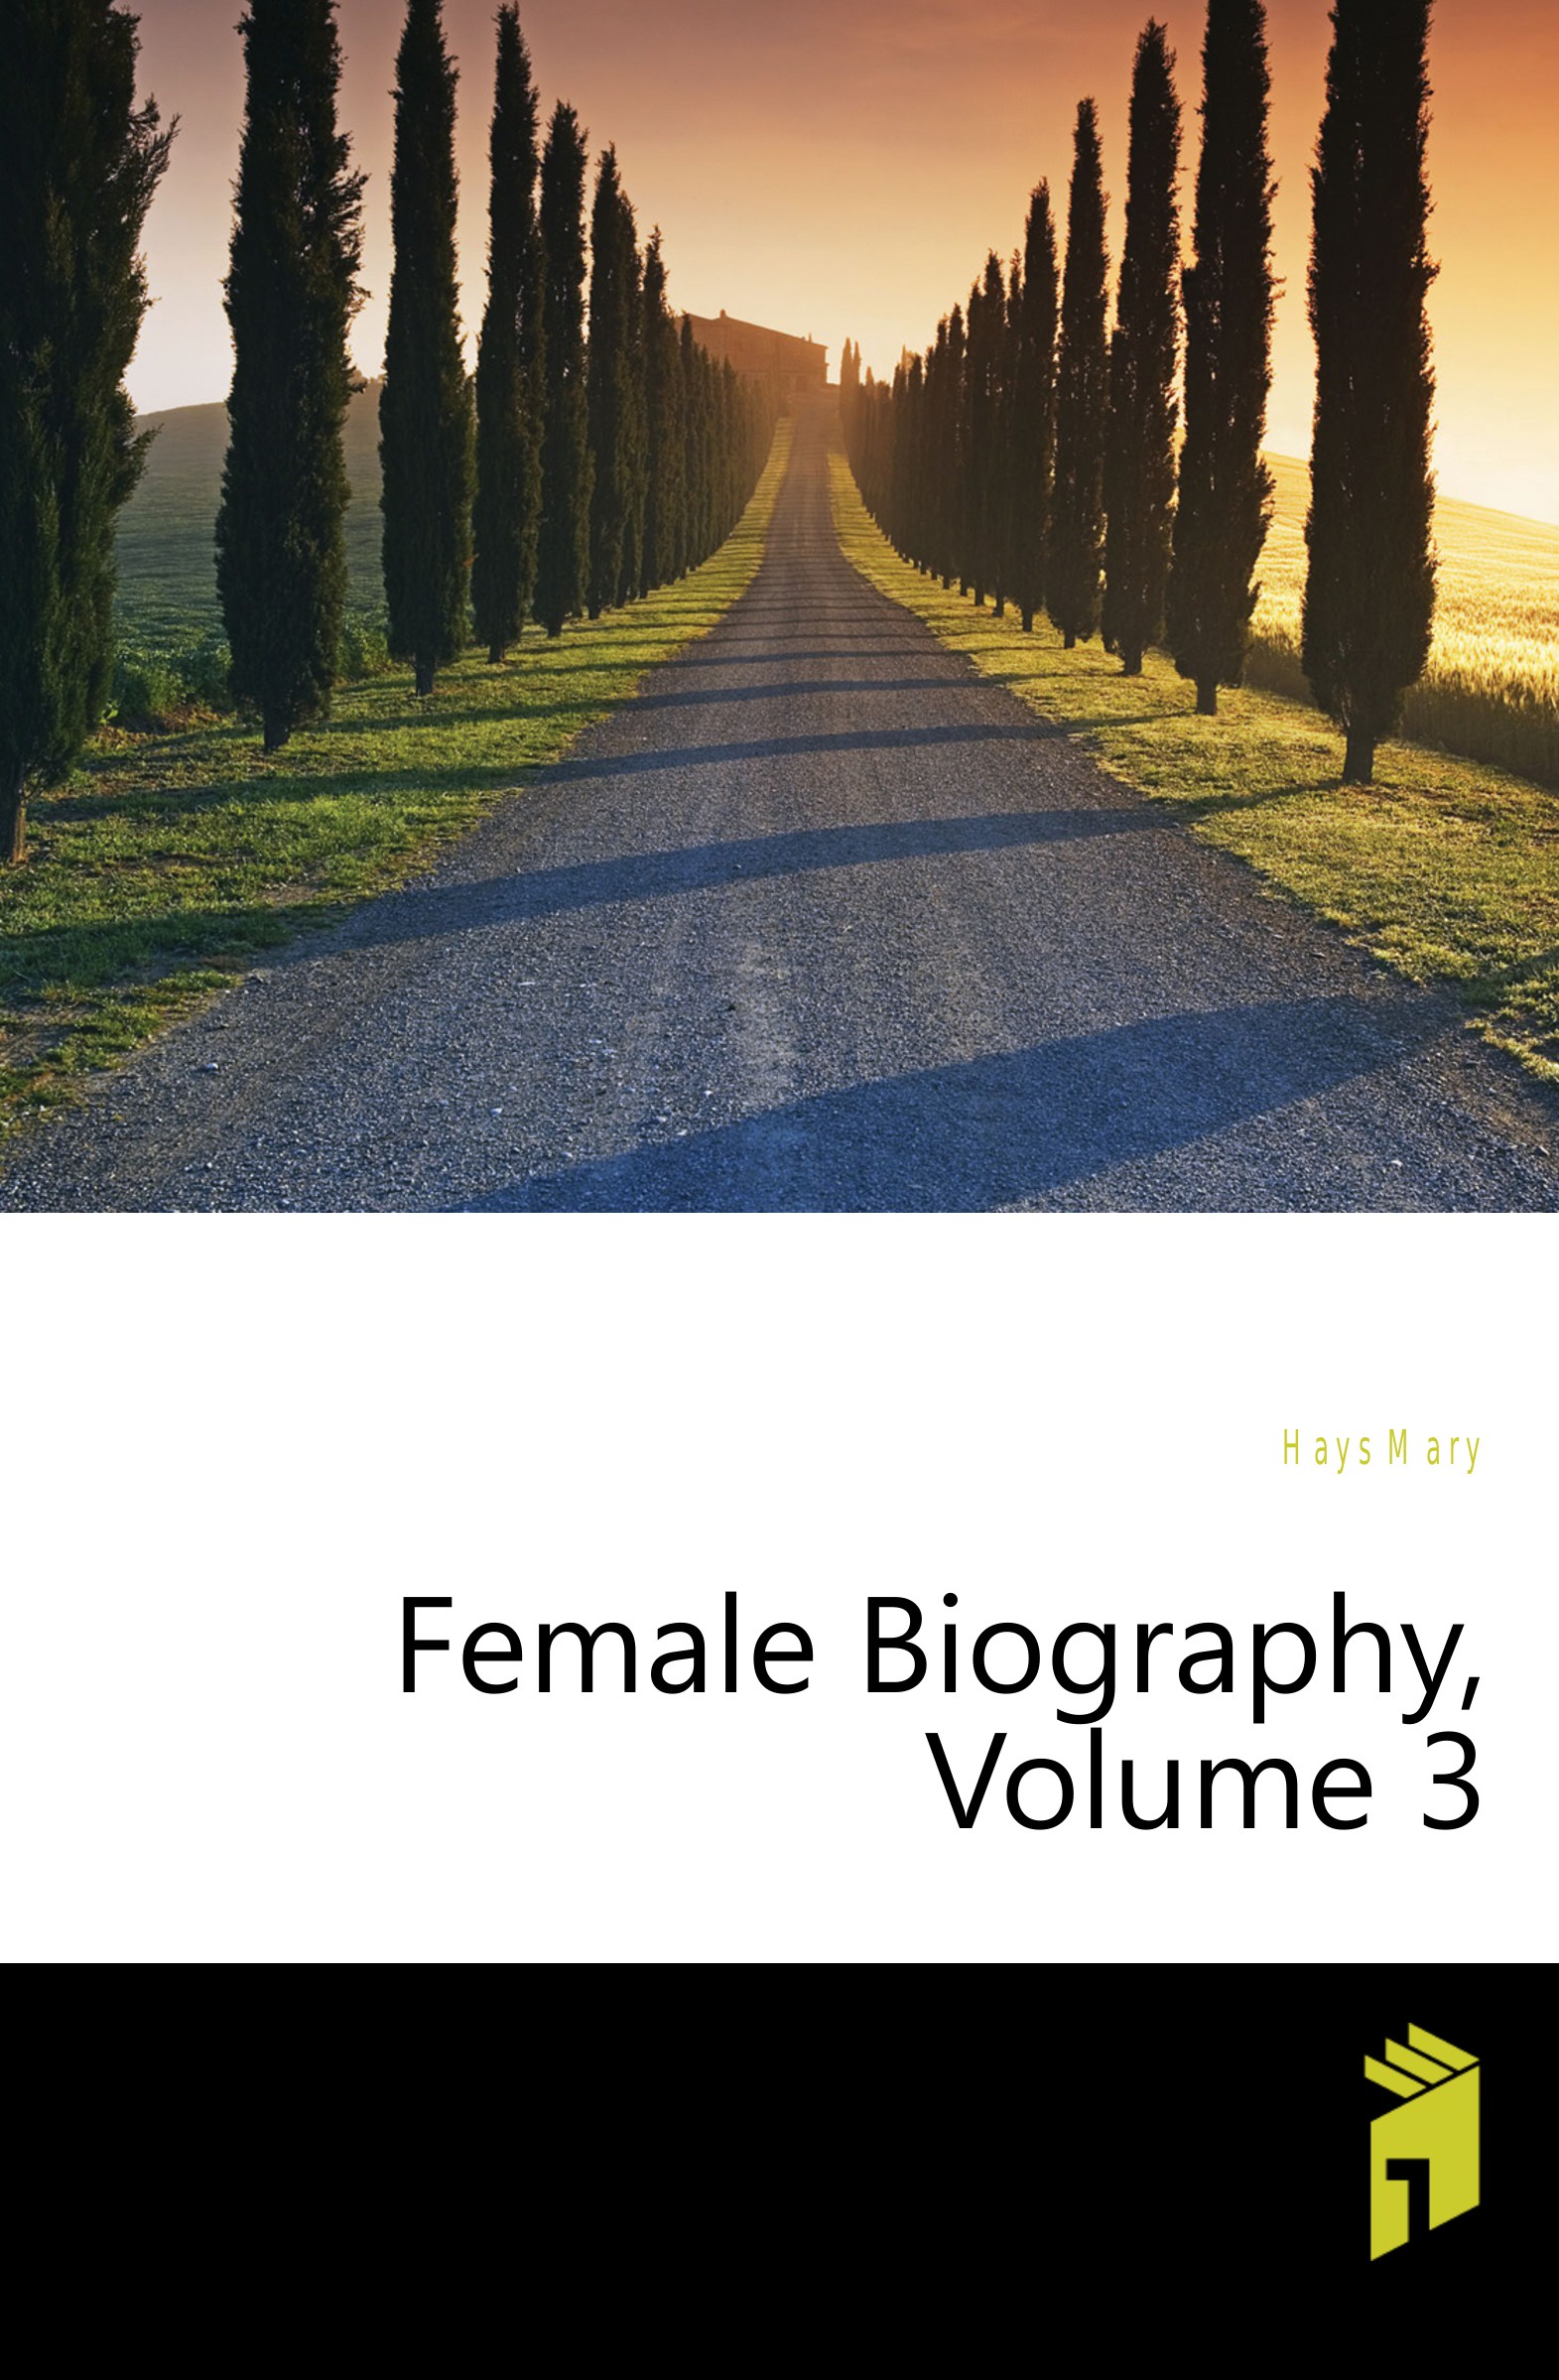 Hays Mary Female Biography, Volume 3